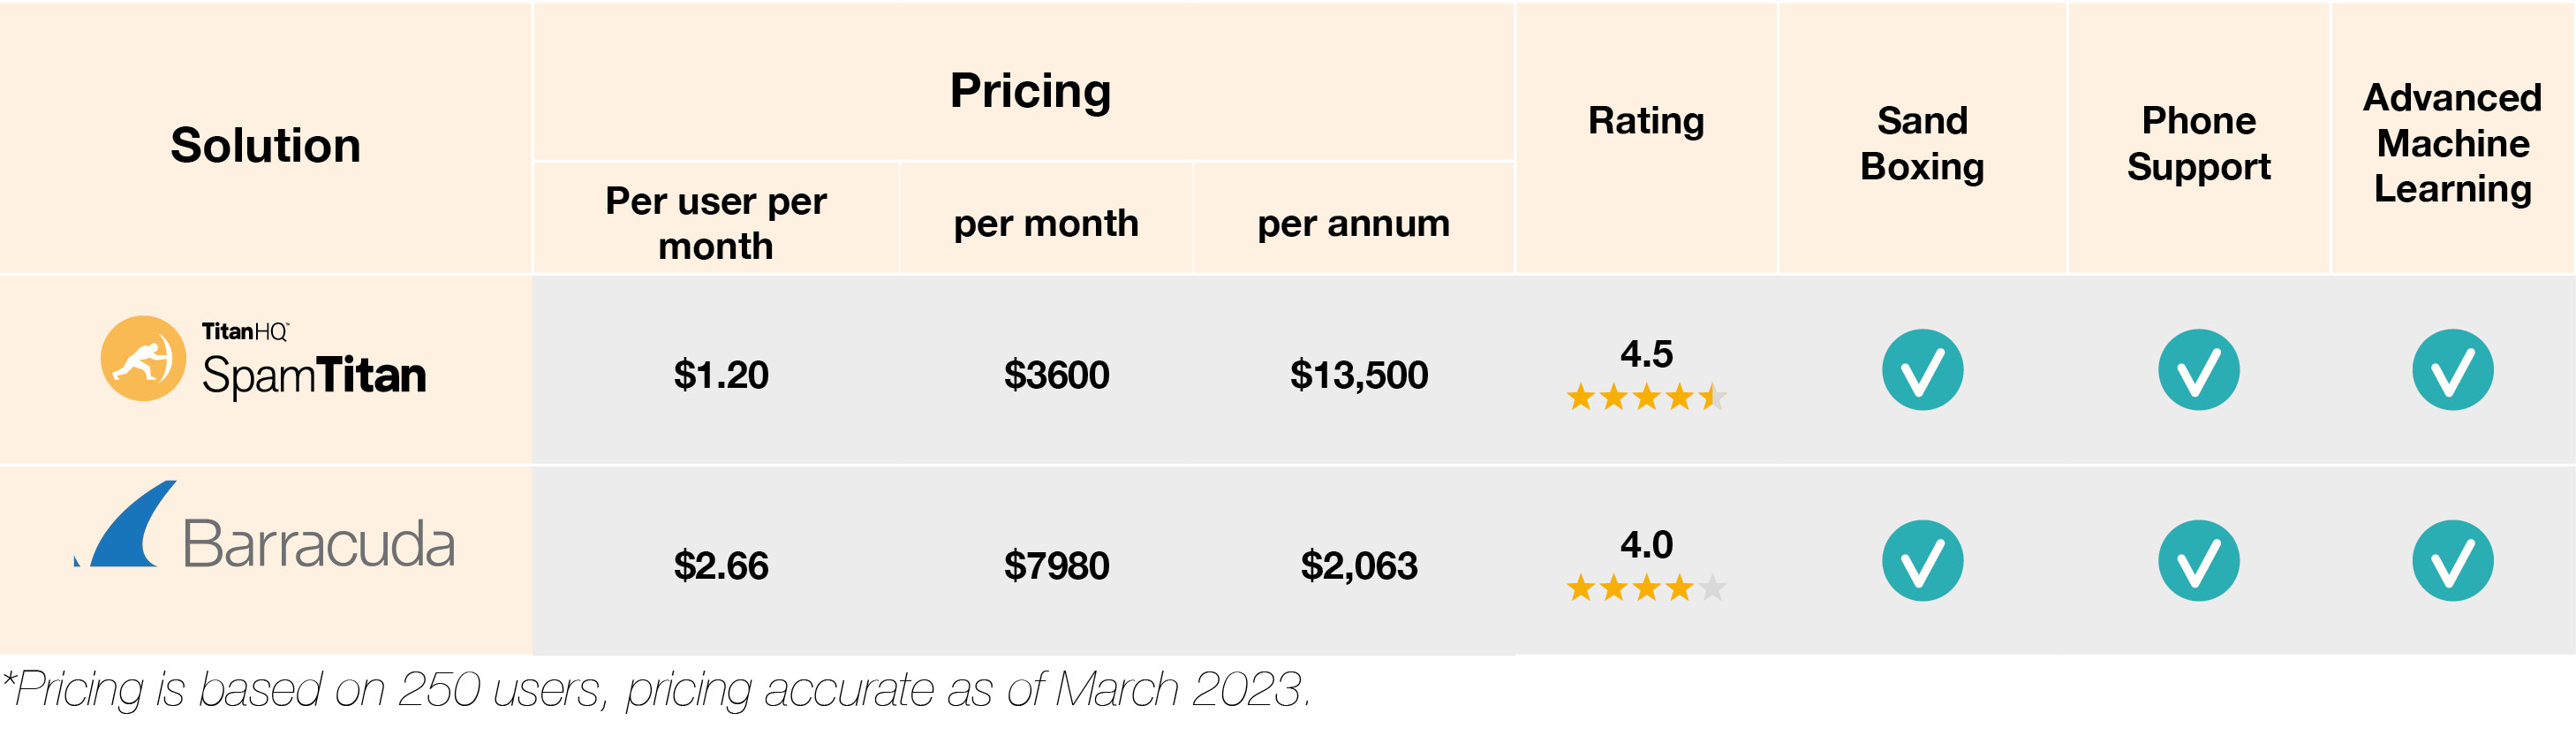 SpamTitan versus Barracuda Pricing